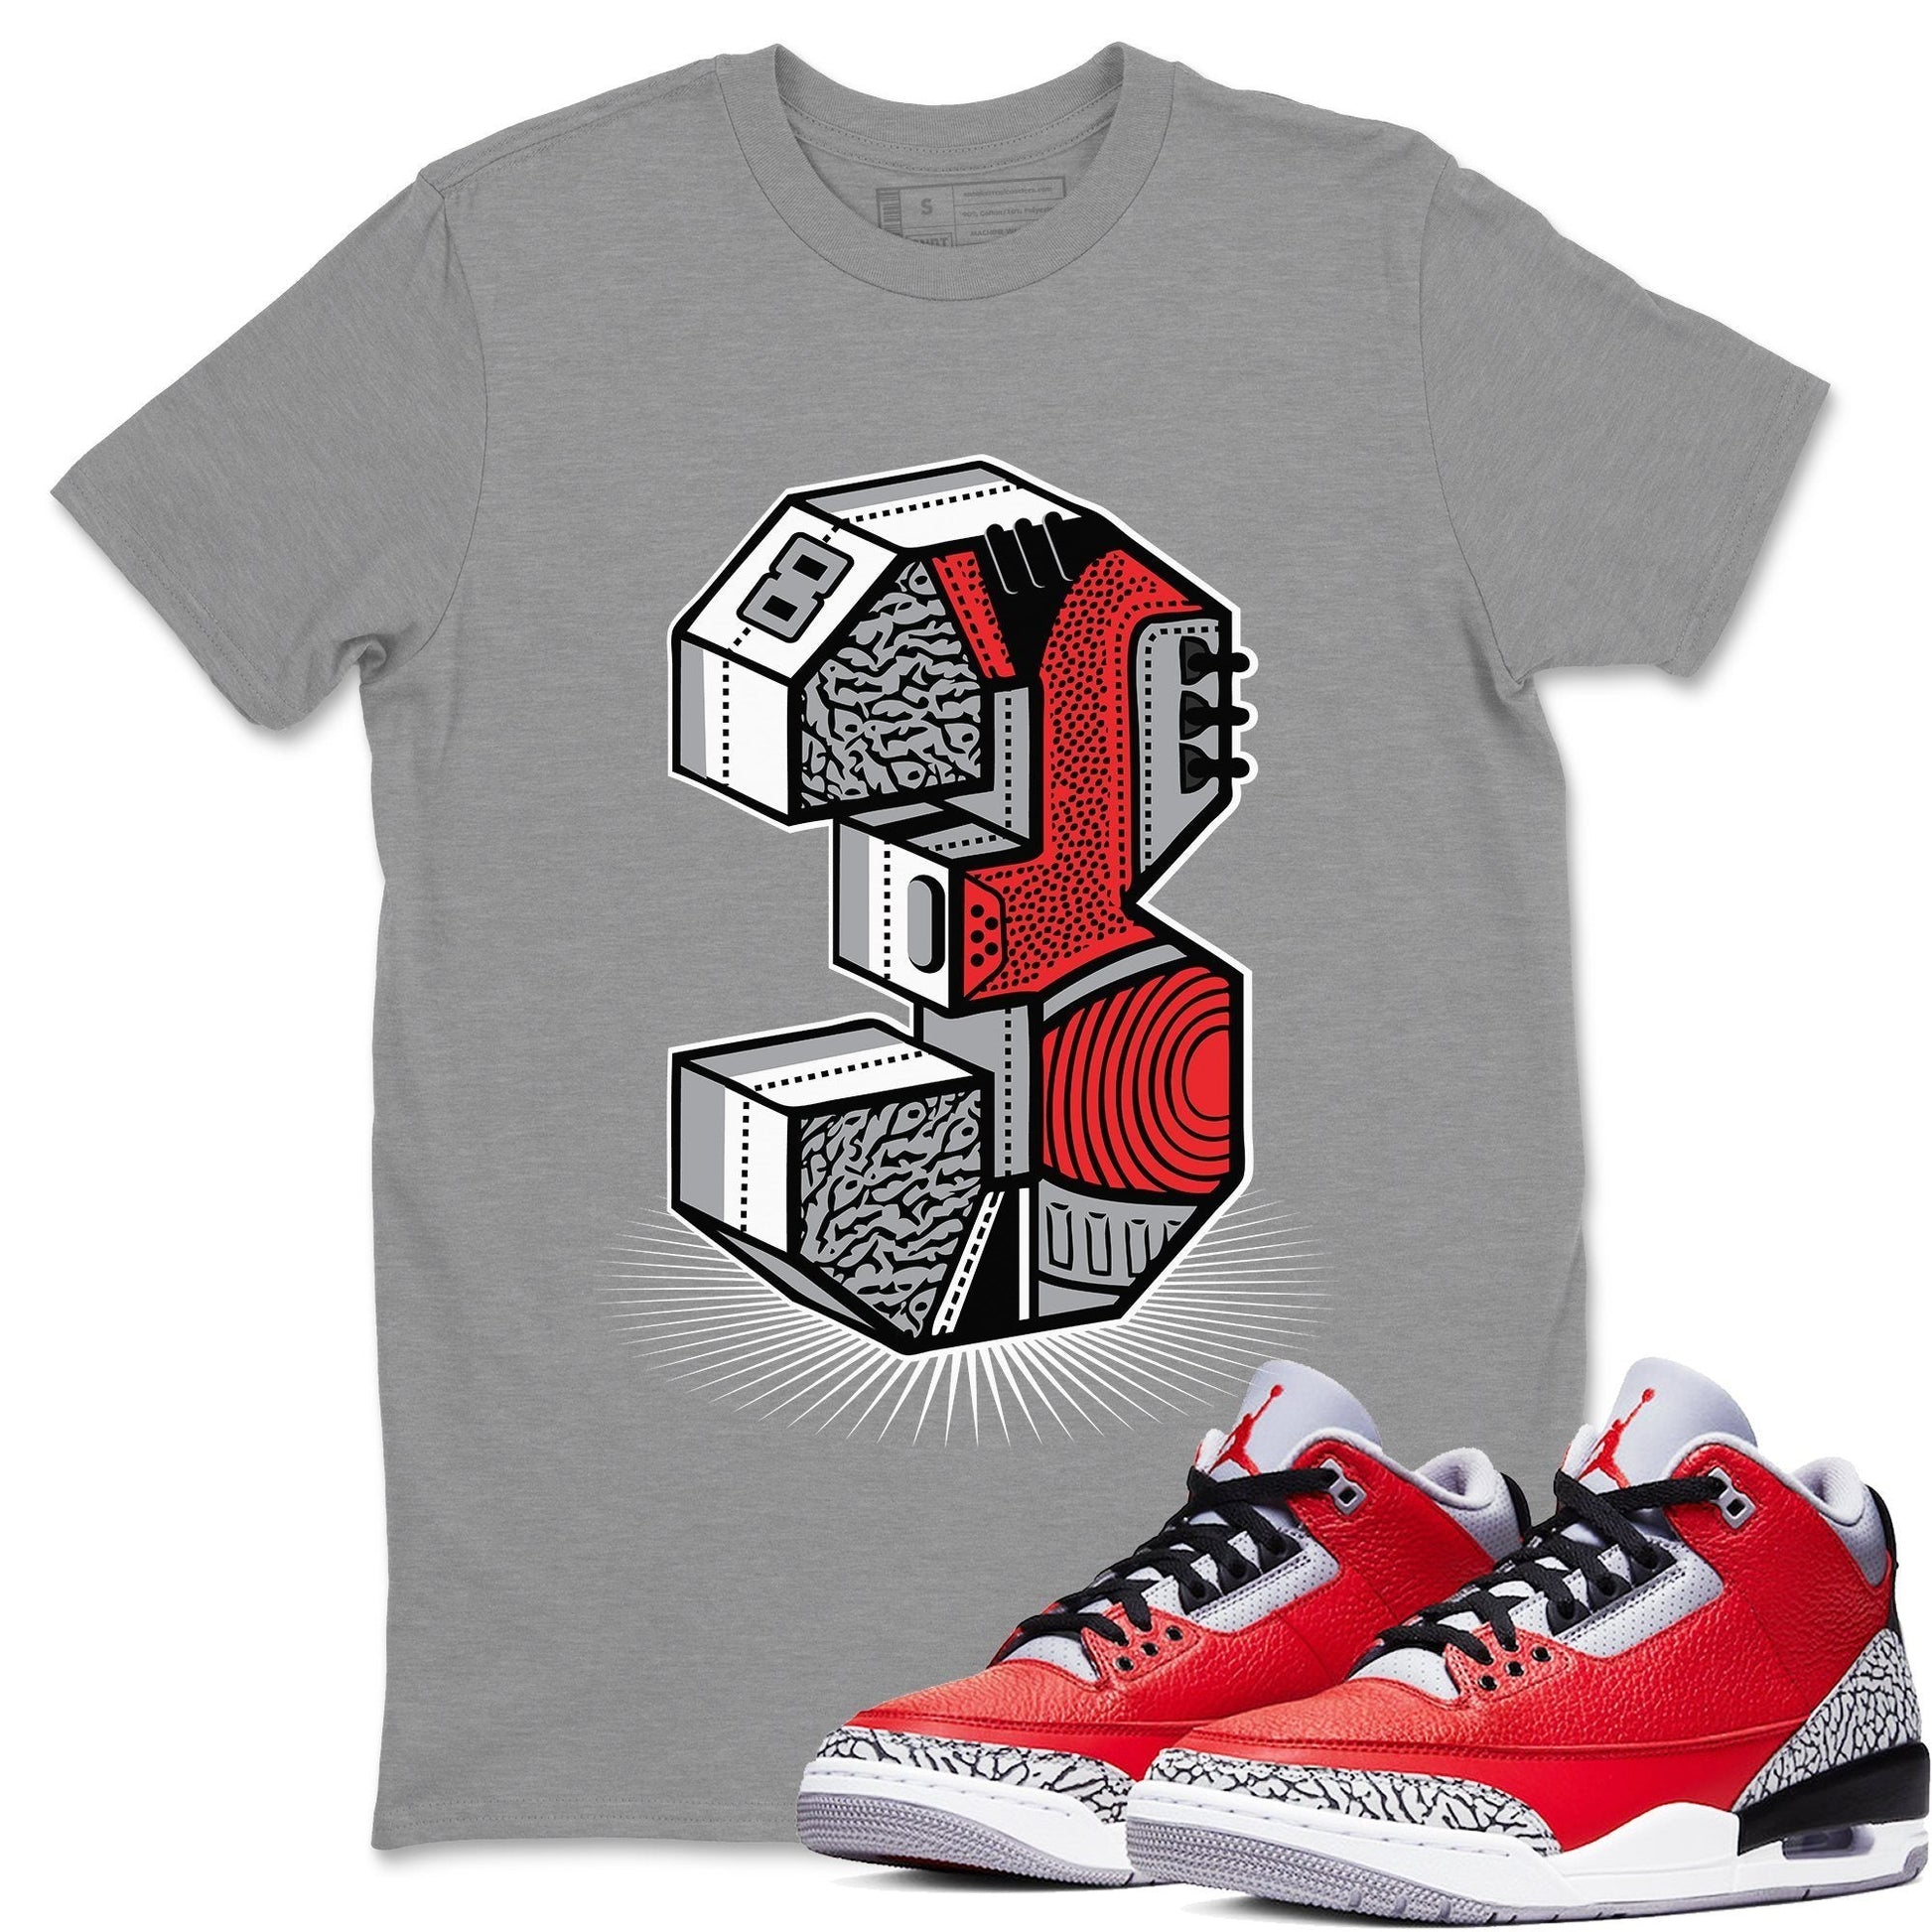 Jordan 3 Unite Sneaker Match Tees Three Statue Sneaker Tees Jordan 3 Unite Sneaker Release Tees Unisex Shirts